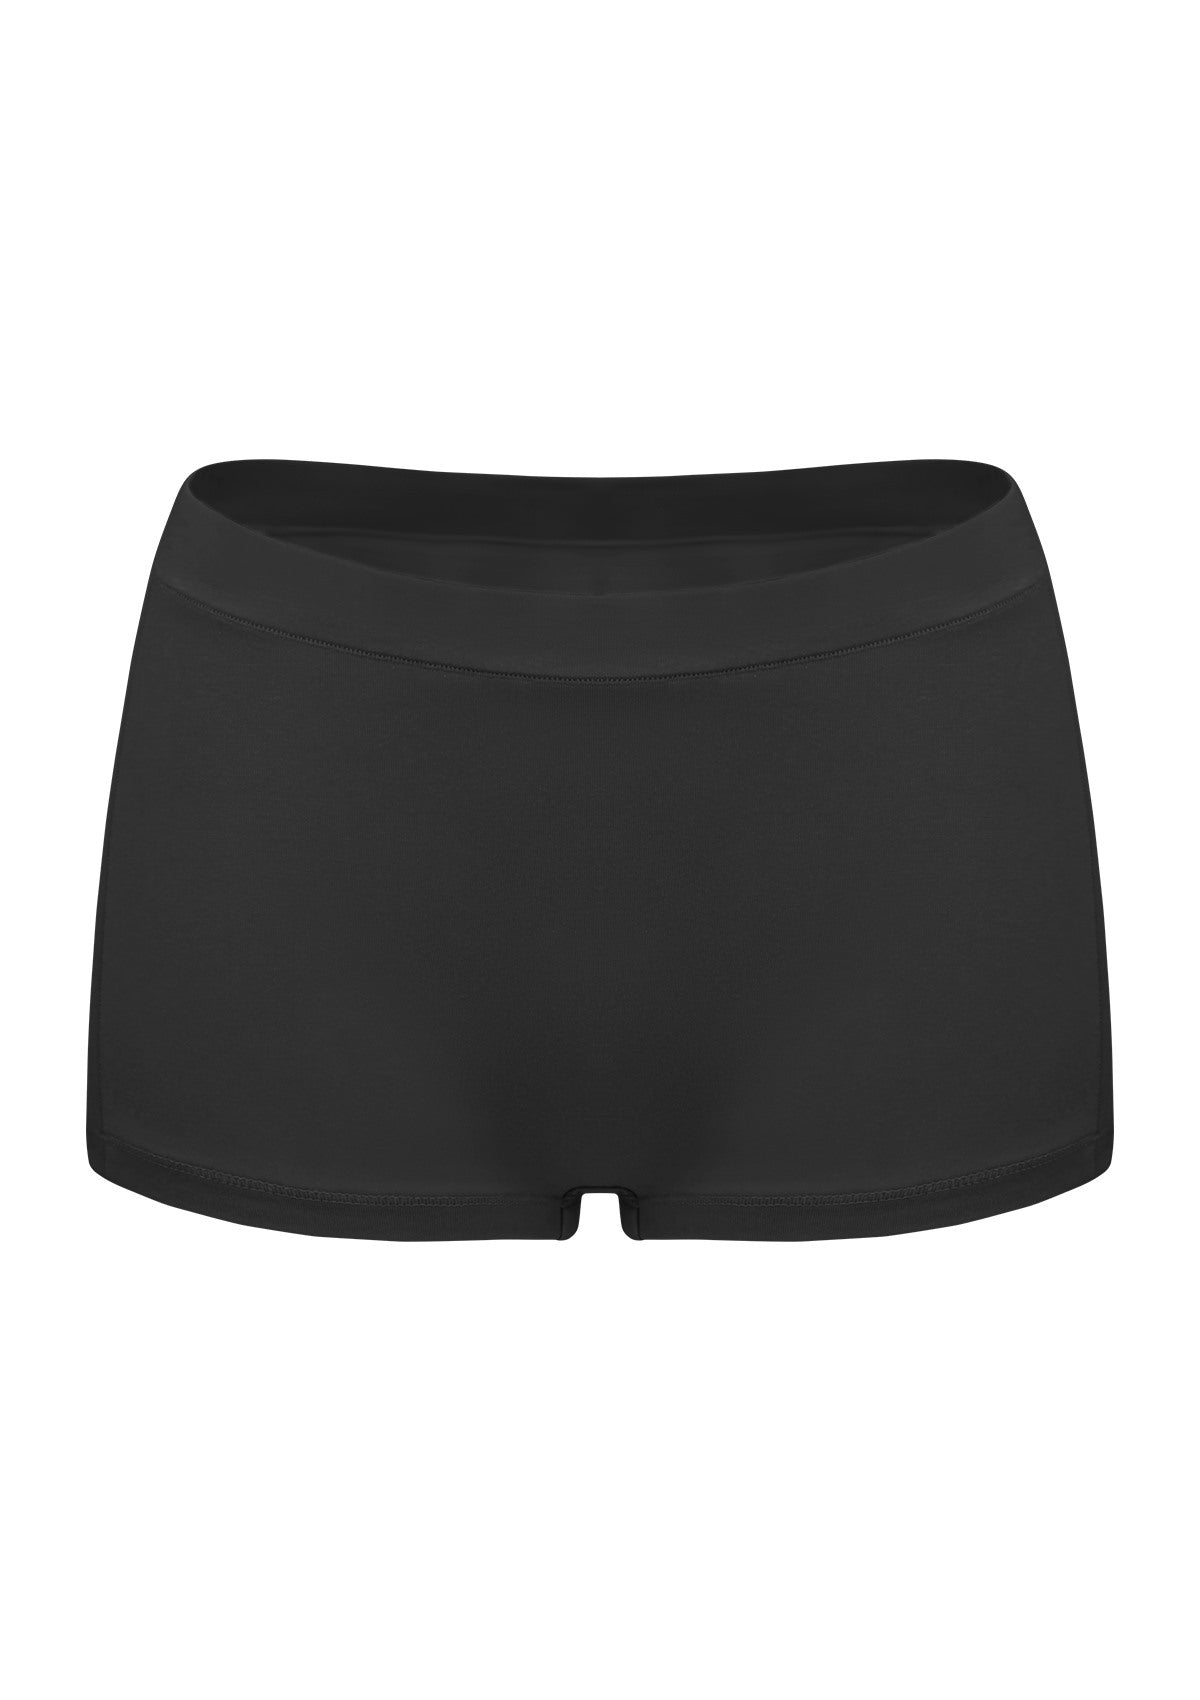 All-Day Comfort Mid-Rise Cotton Boyshorts Underwear 3 Pack - M / Black+Beige+Green